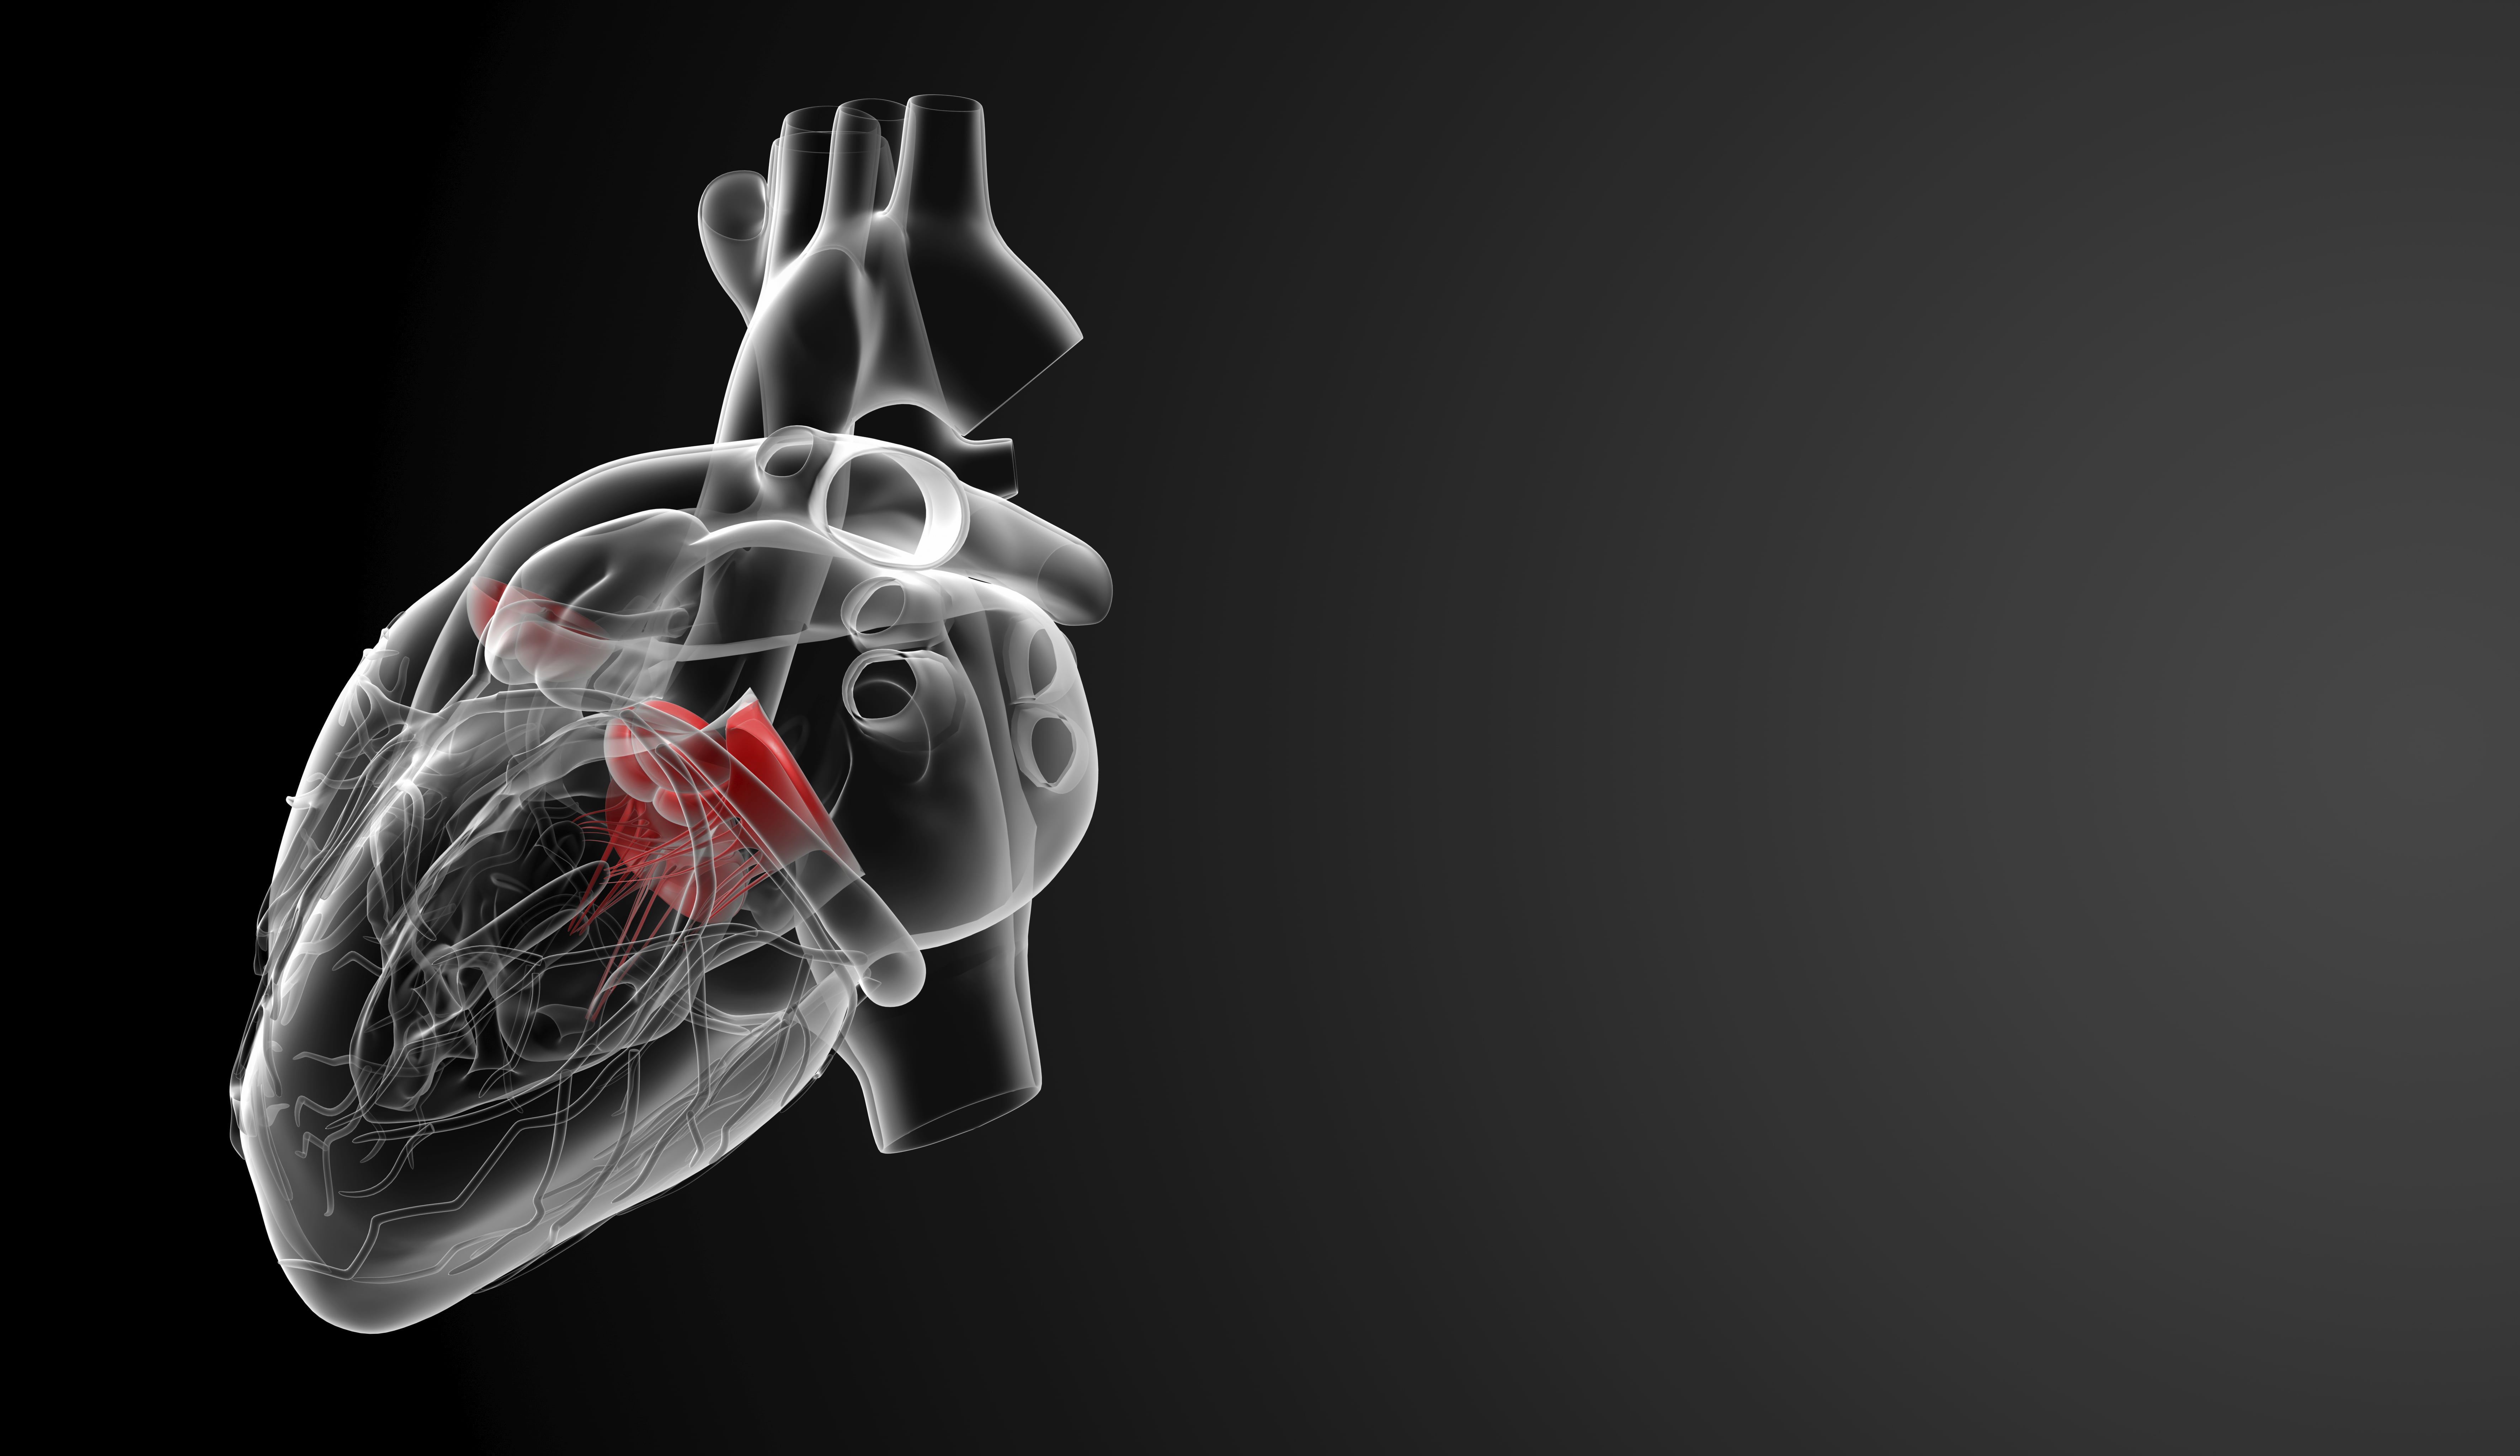 white and red heart illustration, medicine, human organ, studio shot